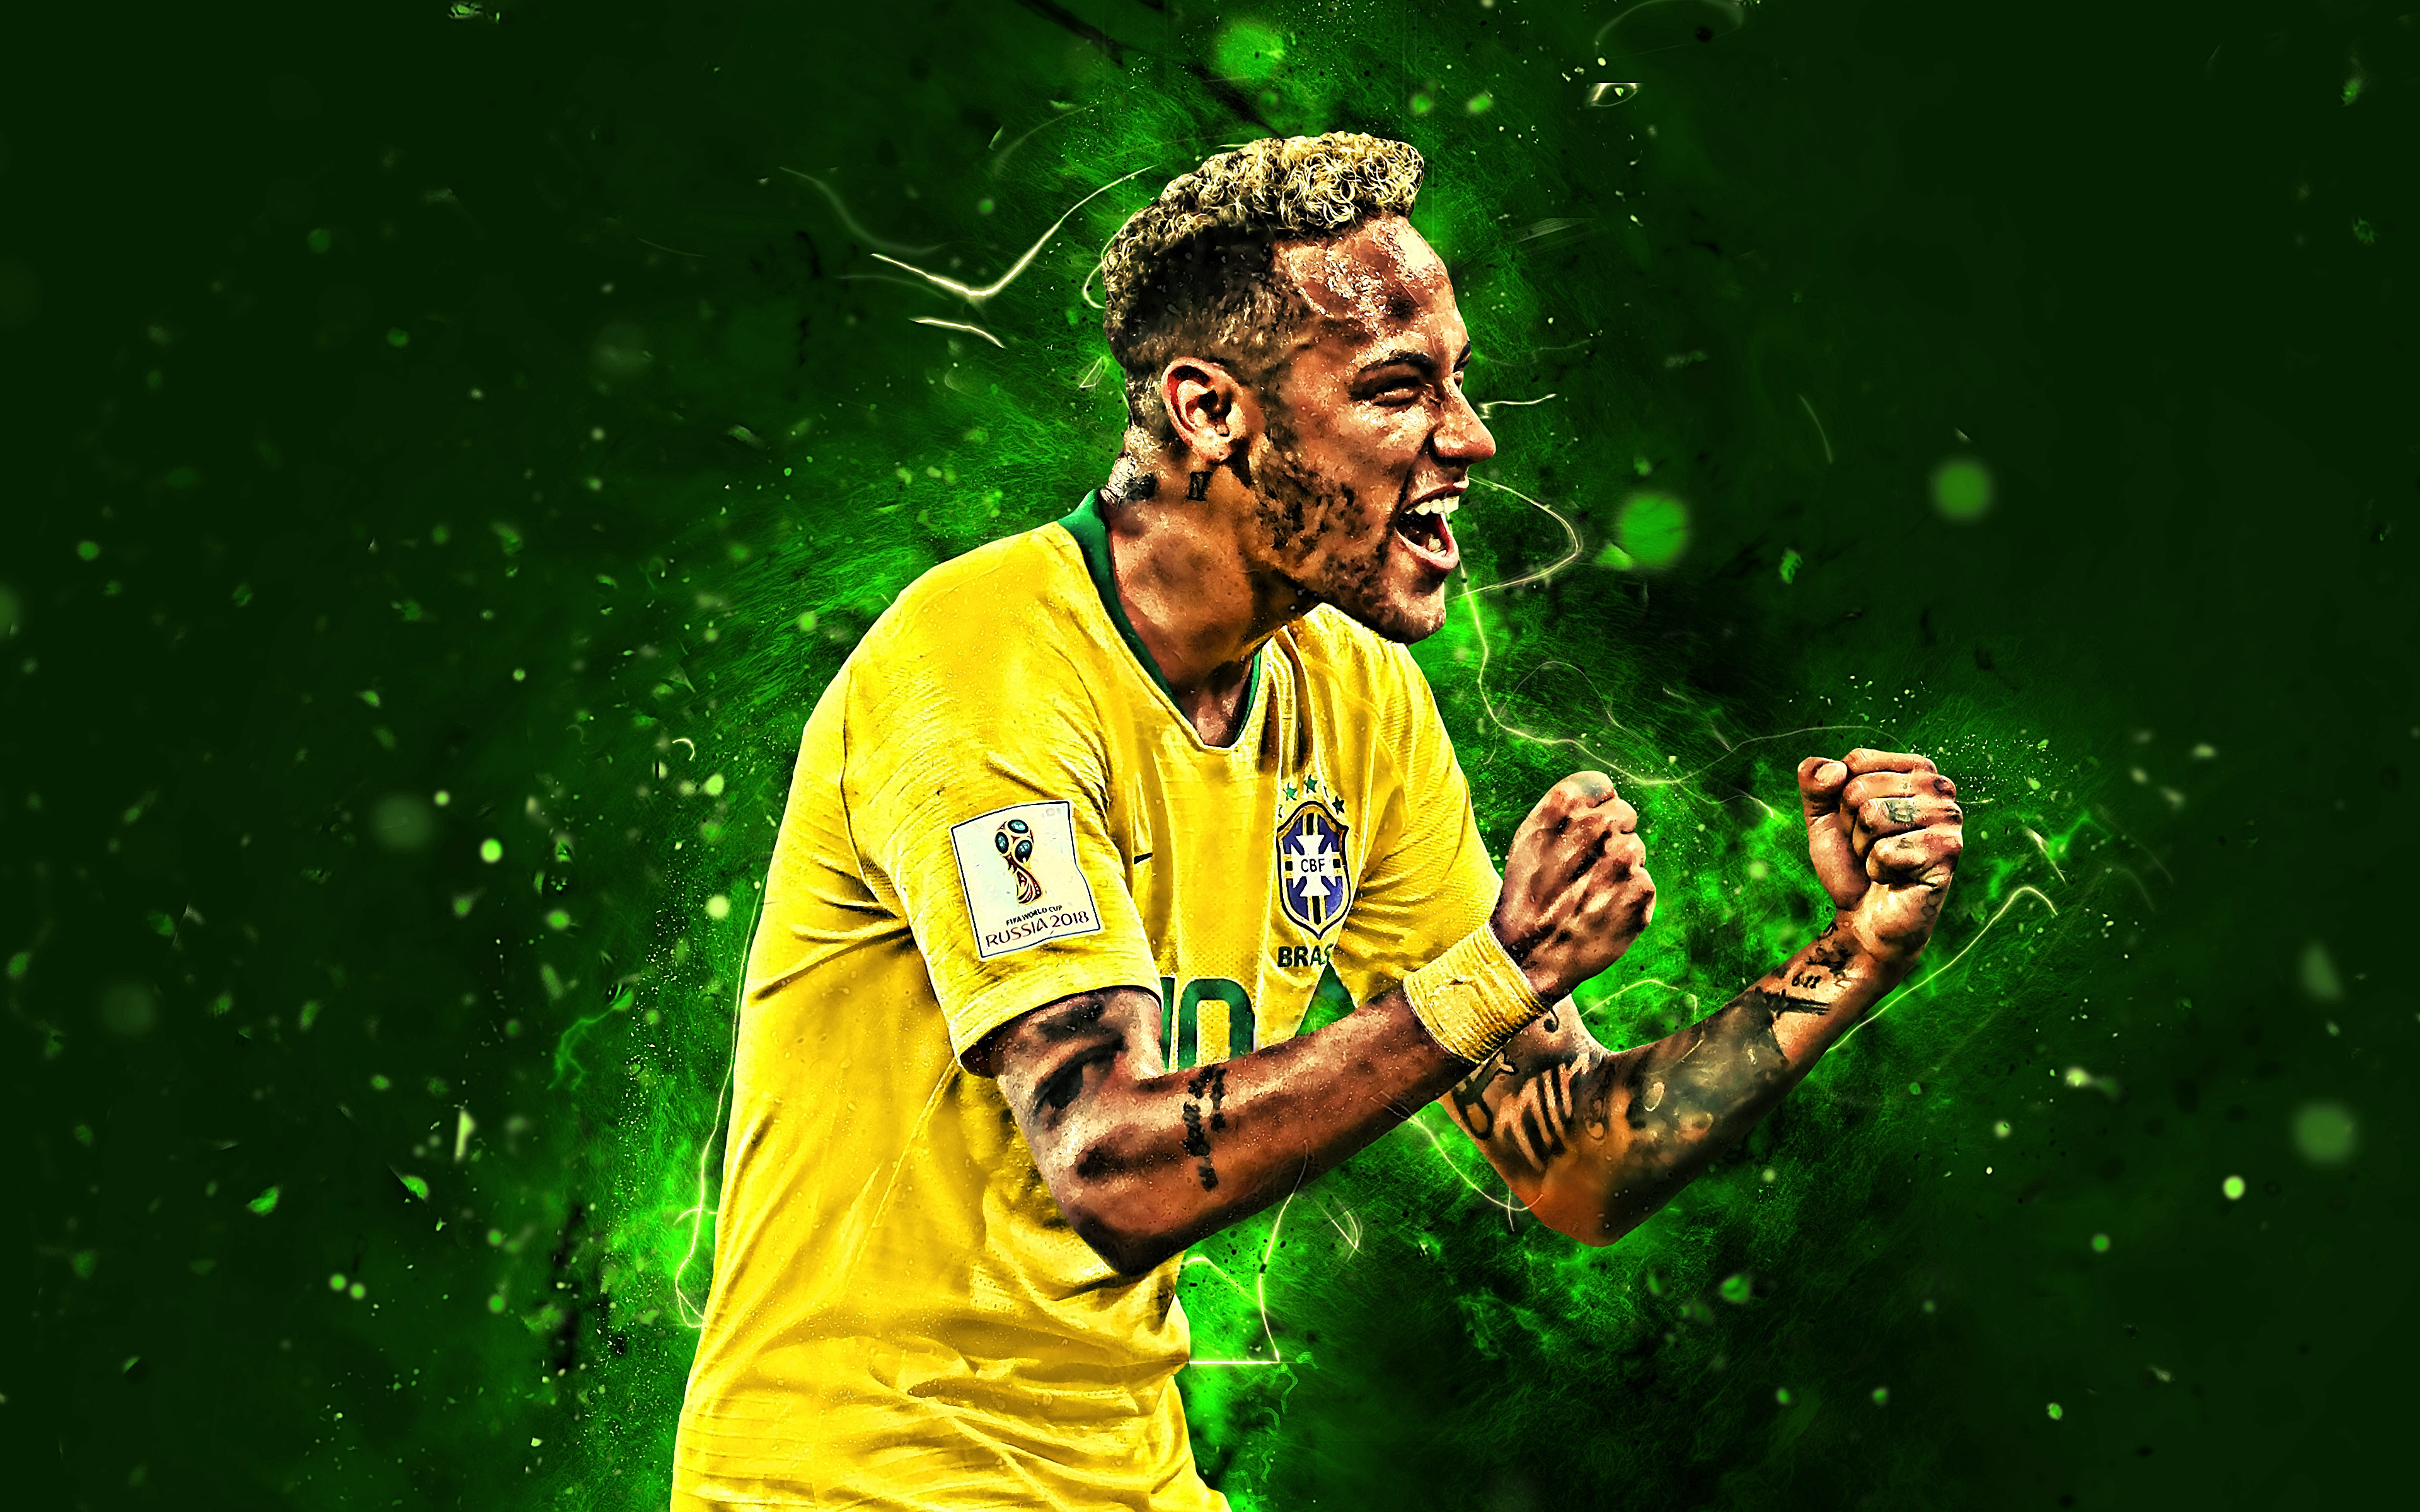 Hd Neymar Football Soccer Player Free After Goal Mobile Desktop Bakground  Download Wallpapers